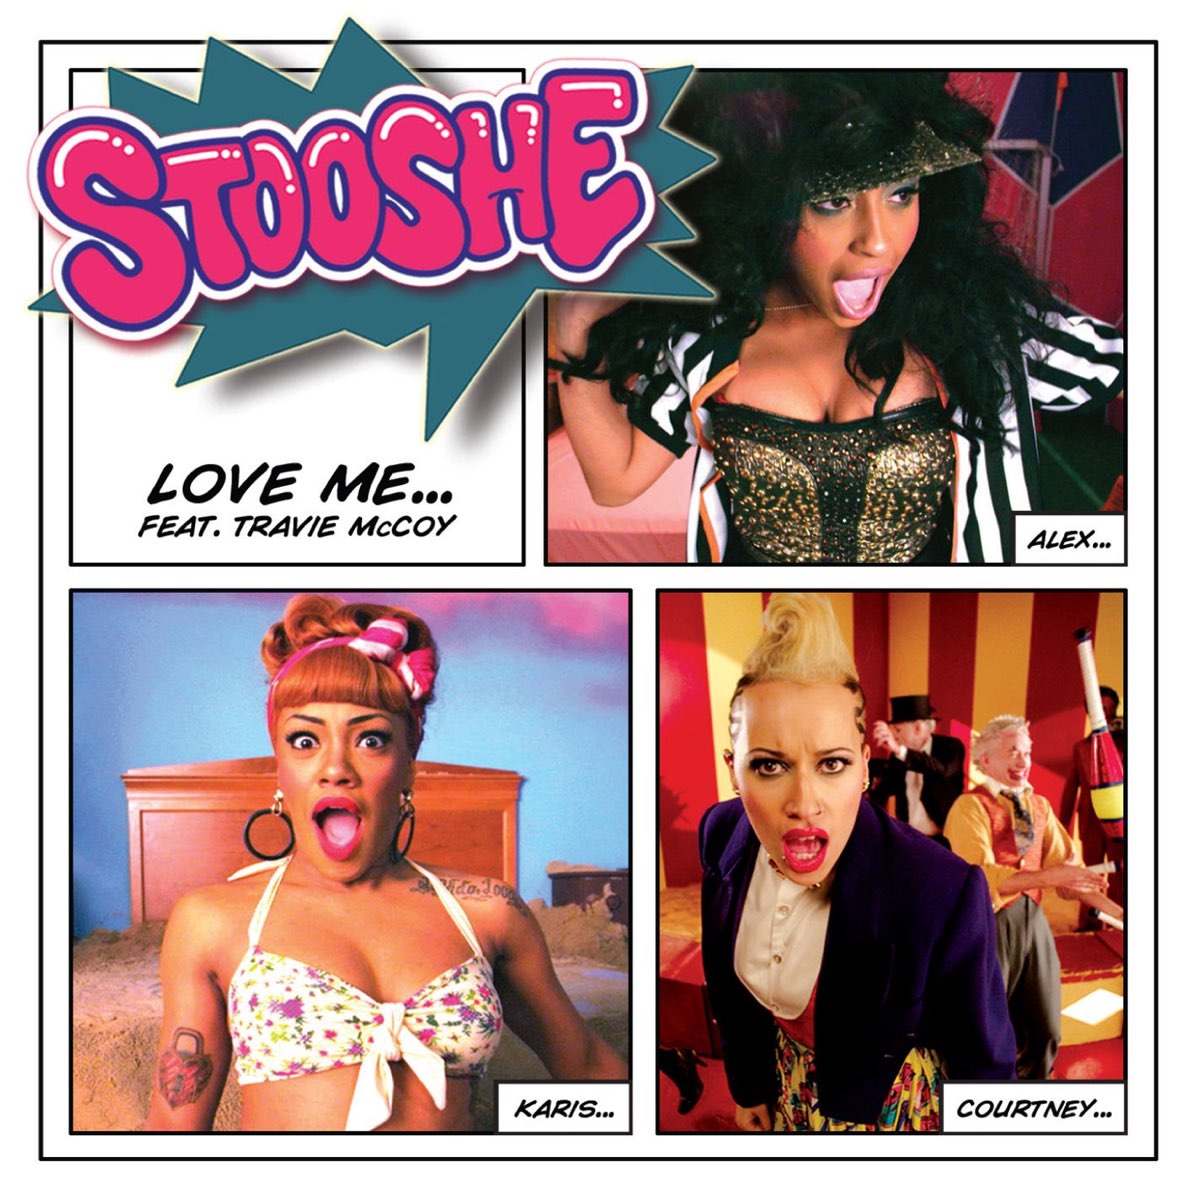 Stooshe ft. featuring Travie McCoy Love Me cover artwork